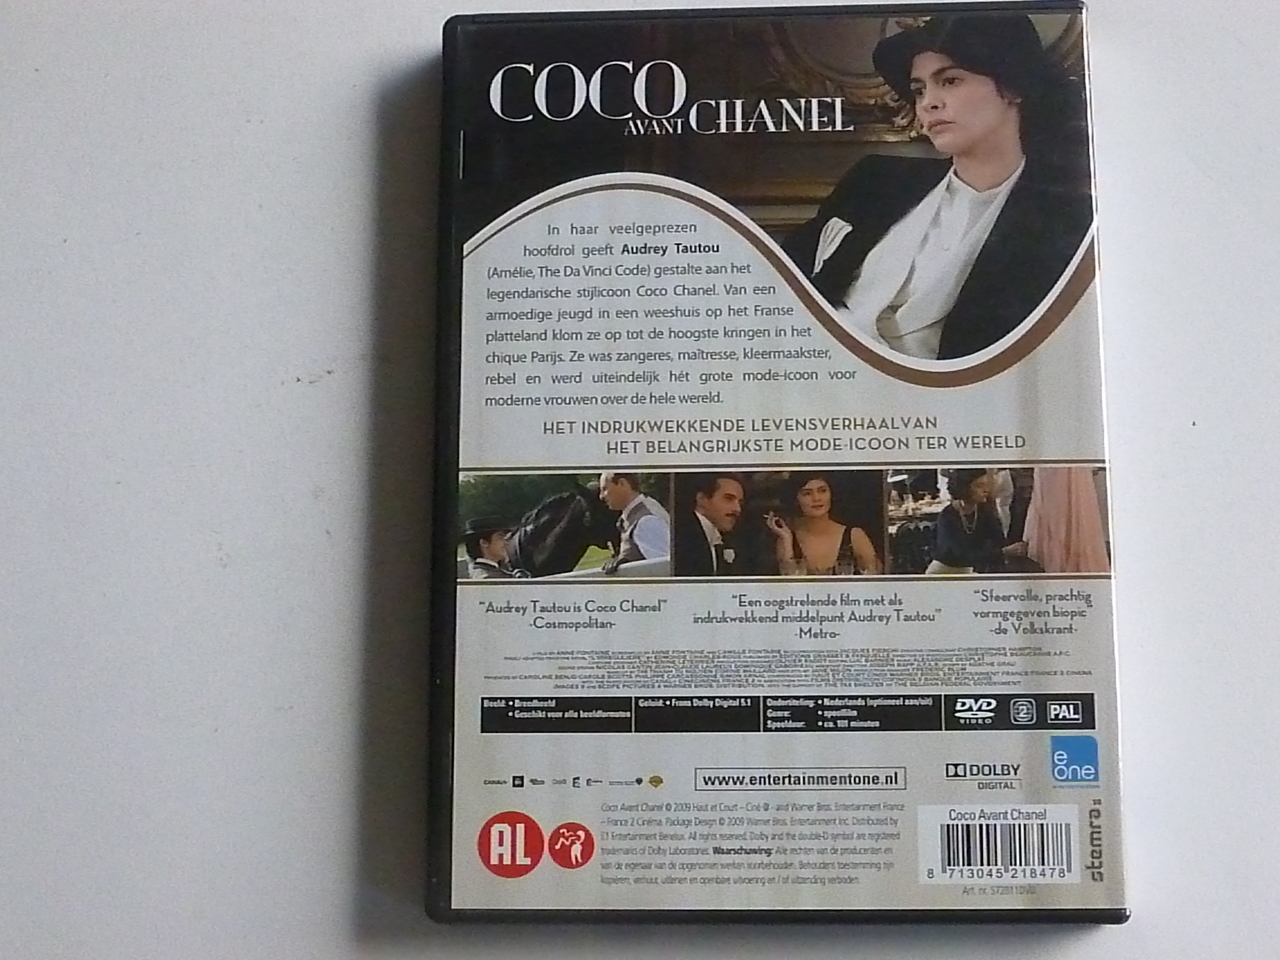 Coco Avant Chanel: on DVD February 16